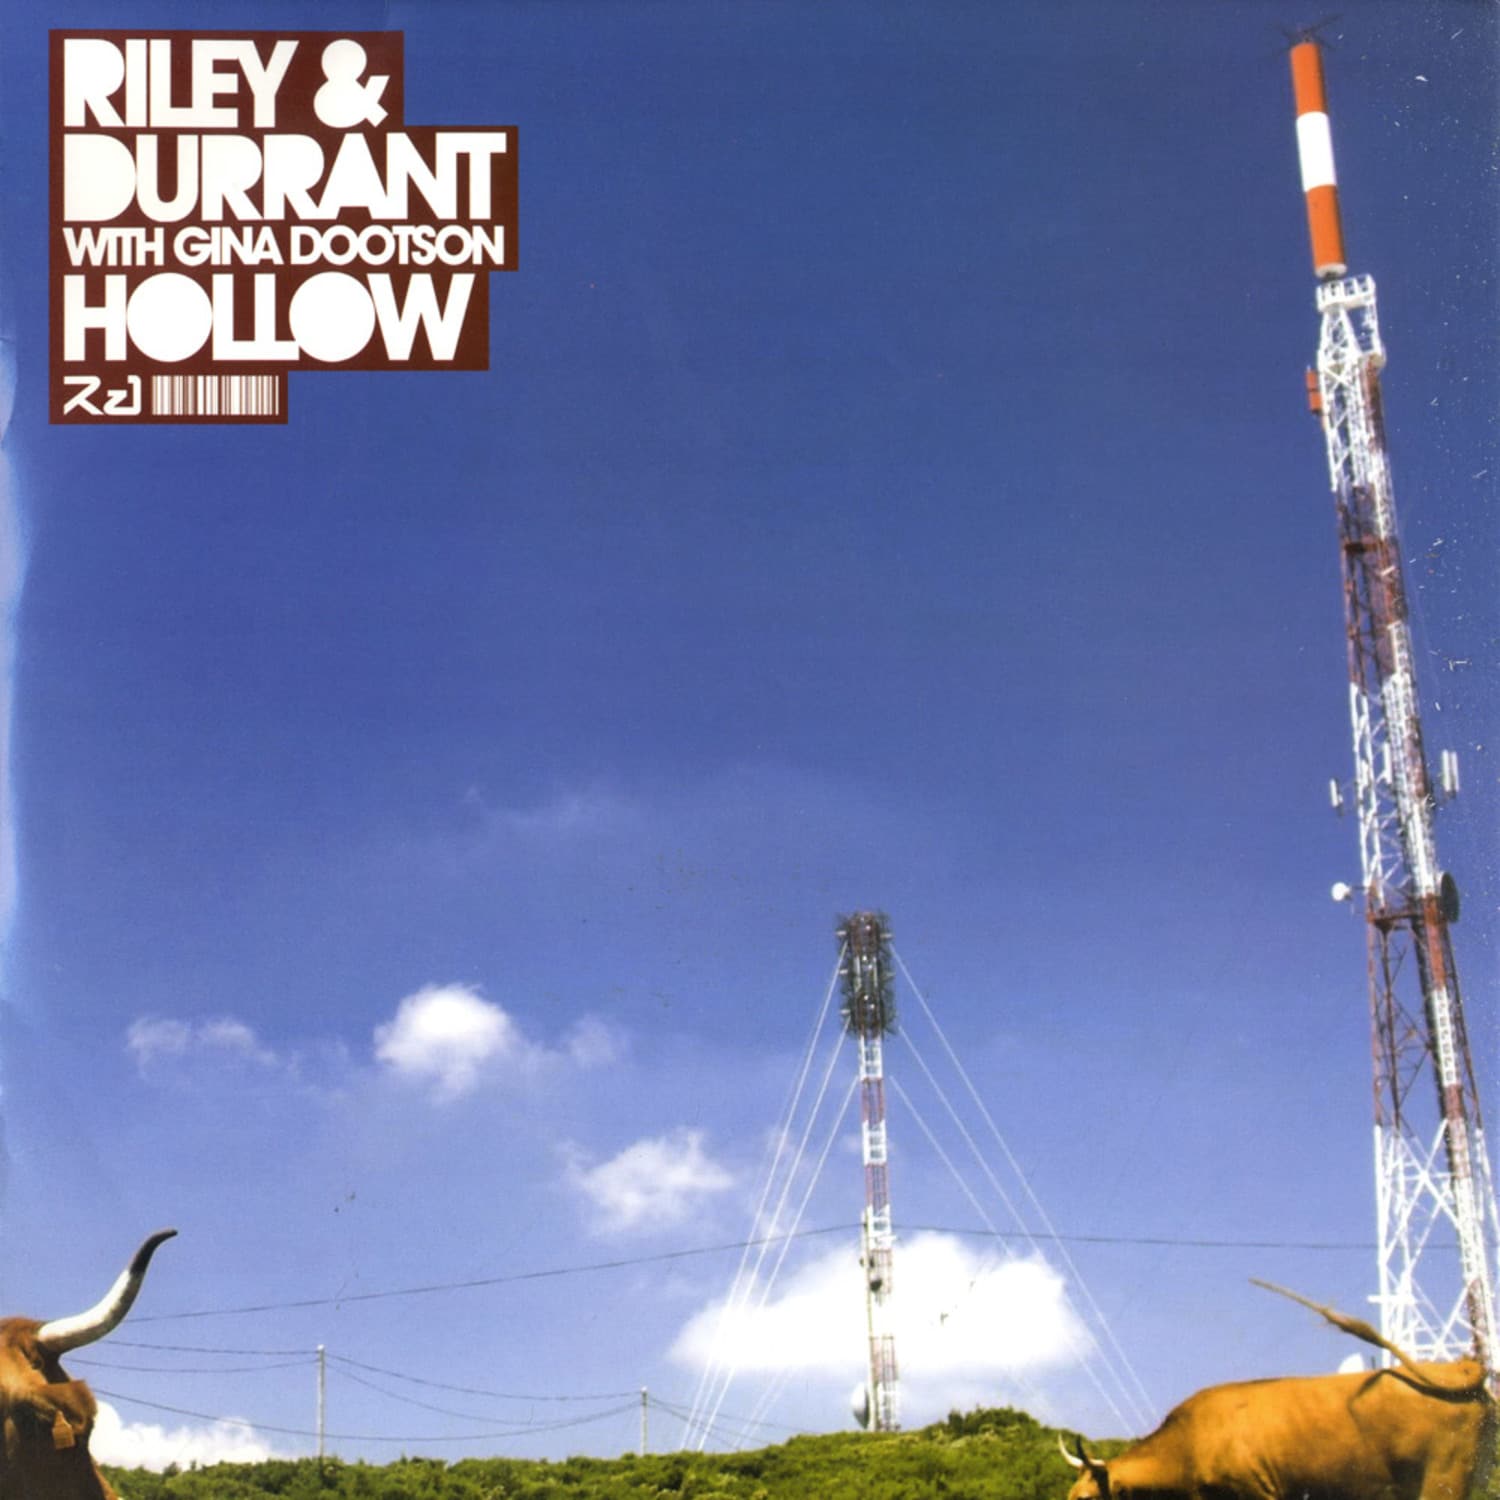 Riley & Durrant - HOLLOW